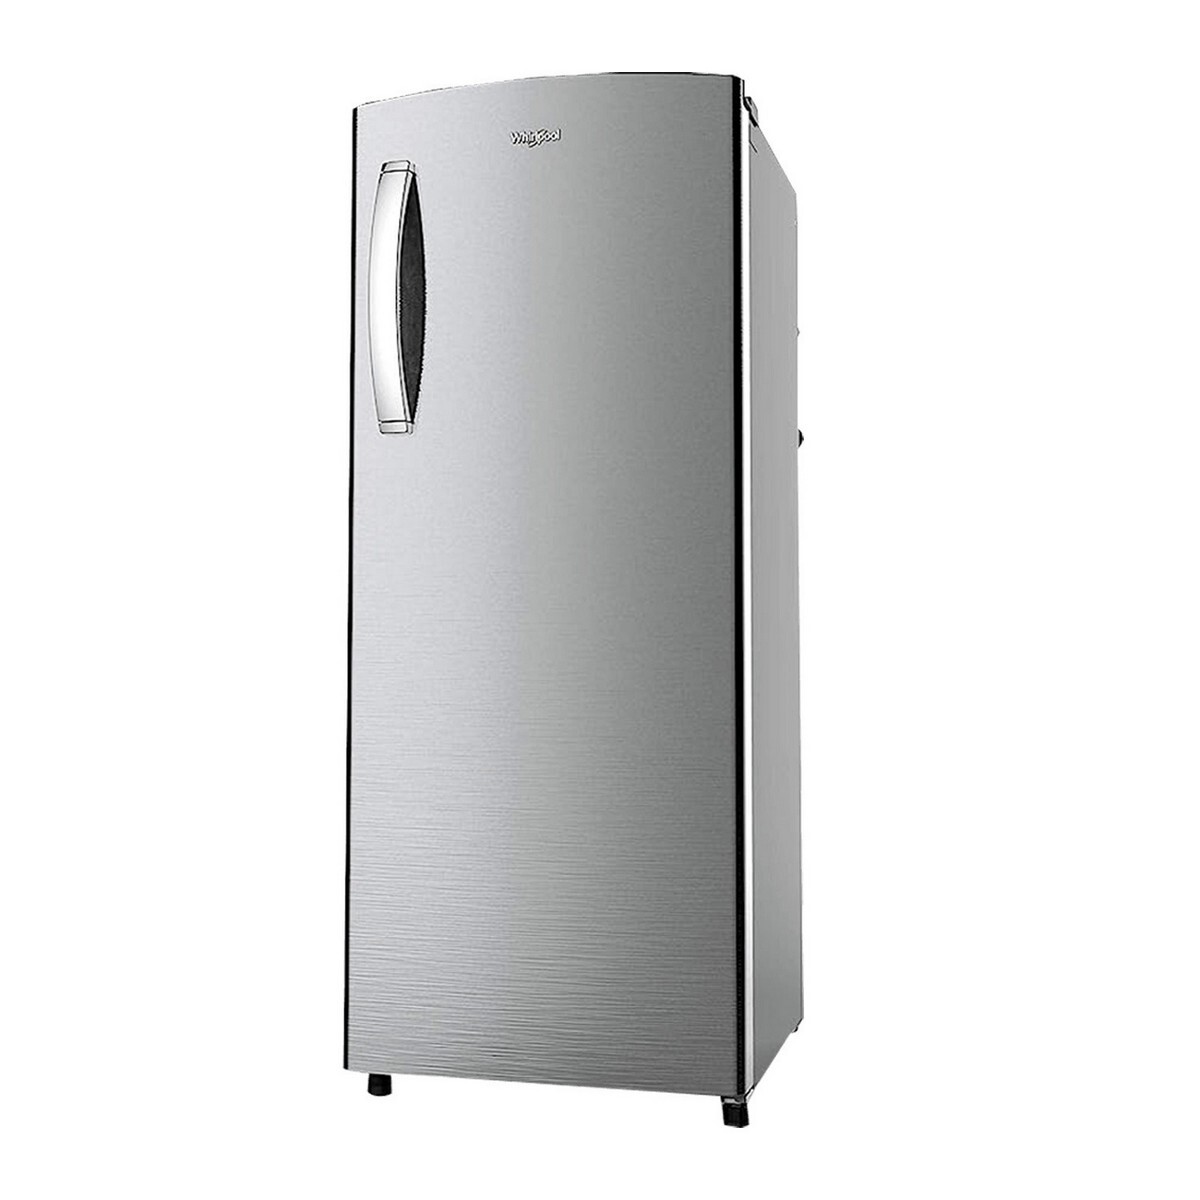 Whirlpool Refrigerator Direct Cool 215 IMPRO PRM 3S Cool illusia 192L